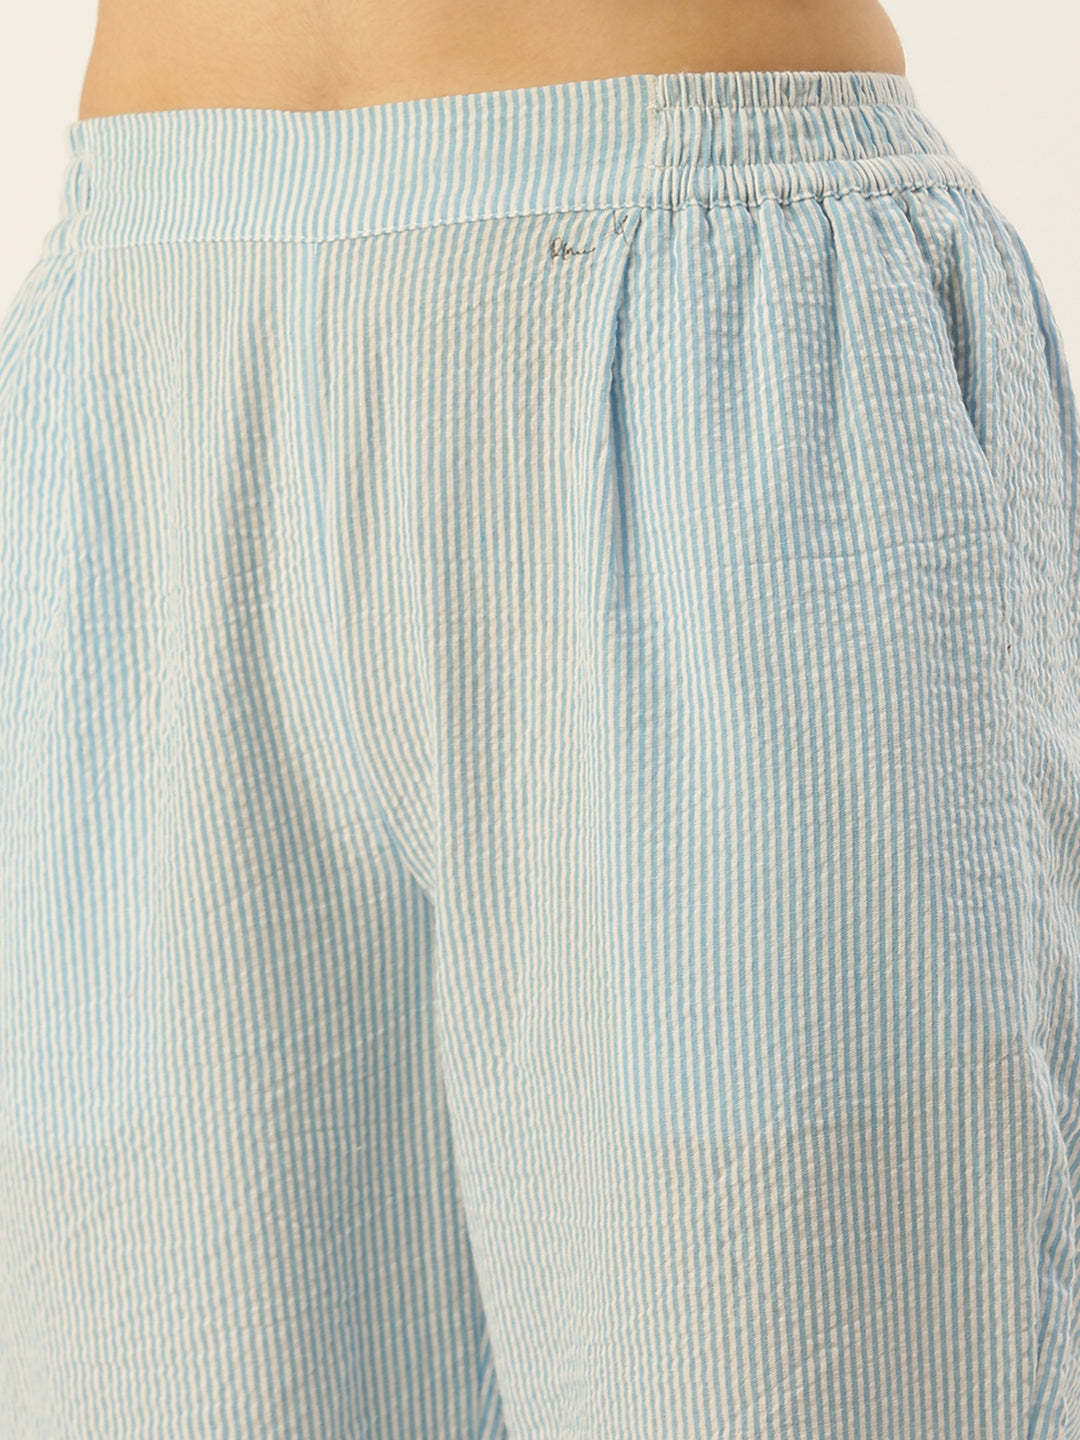 De Moza Women's Casual Pant Light Blue